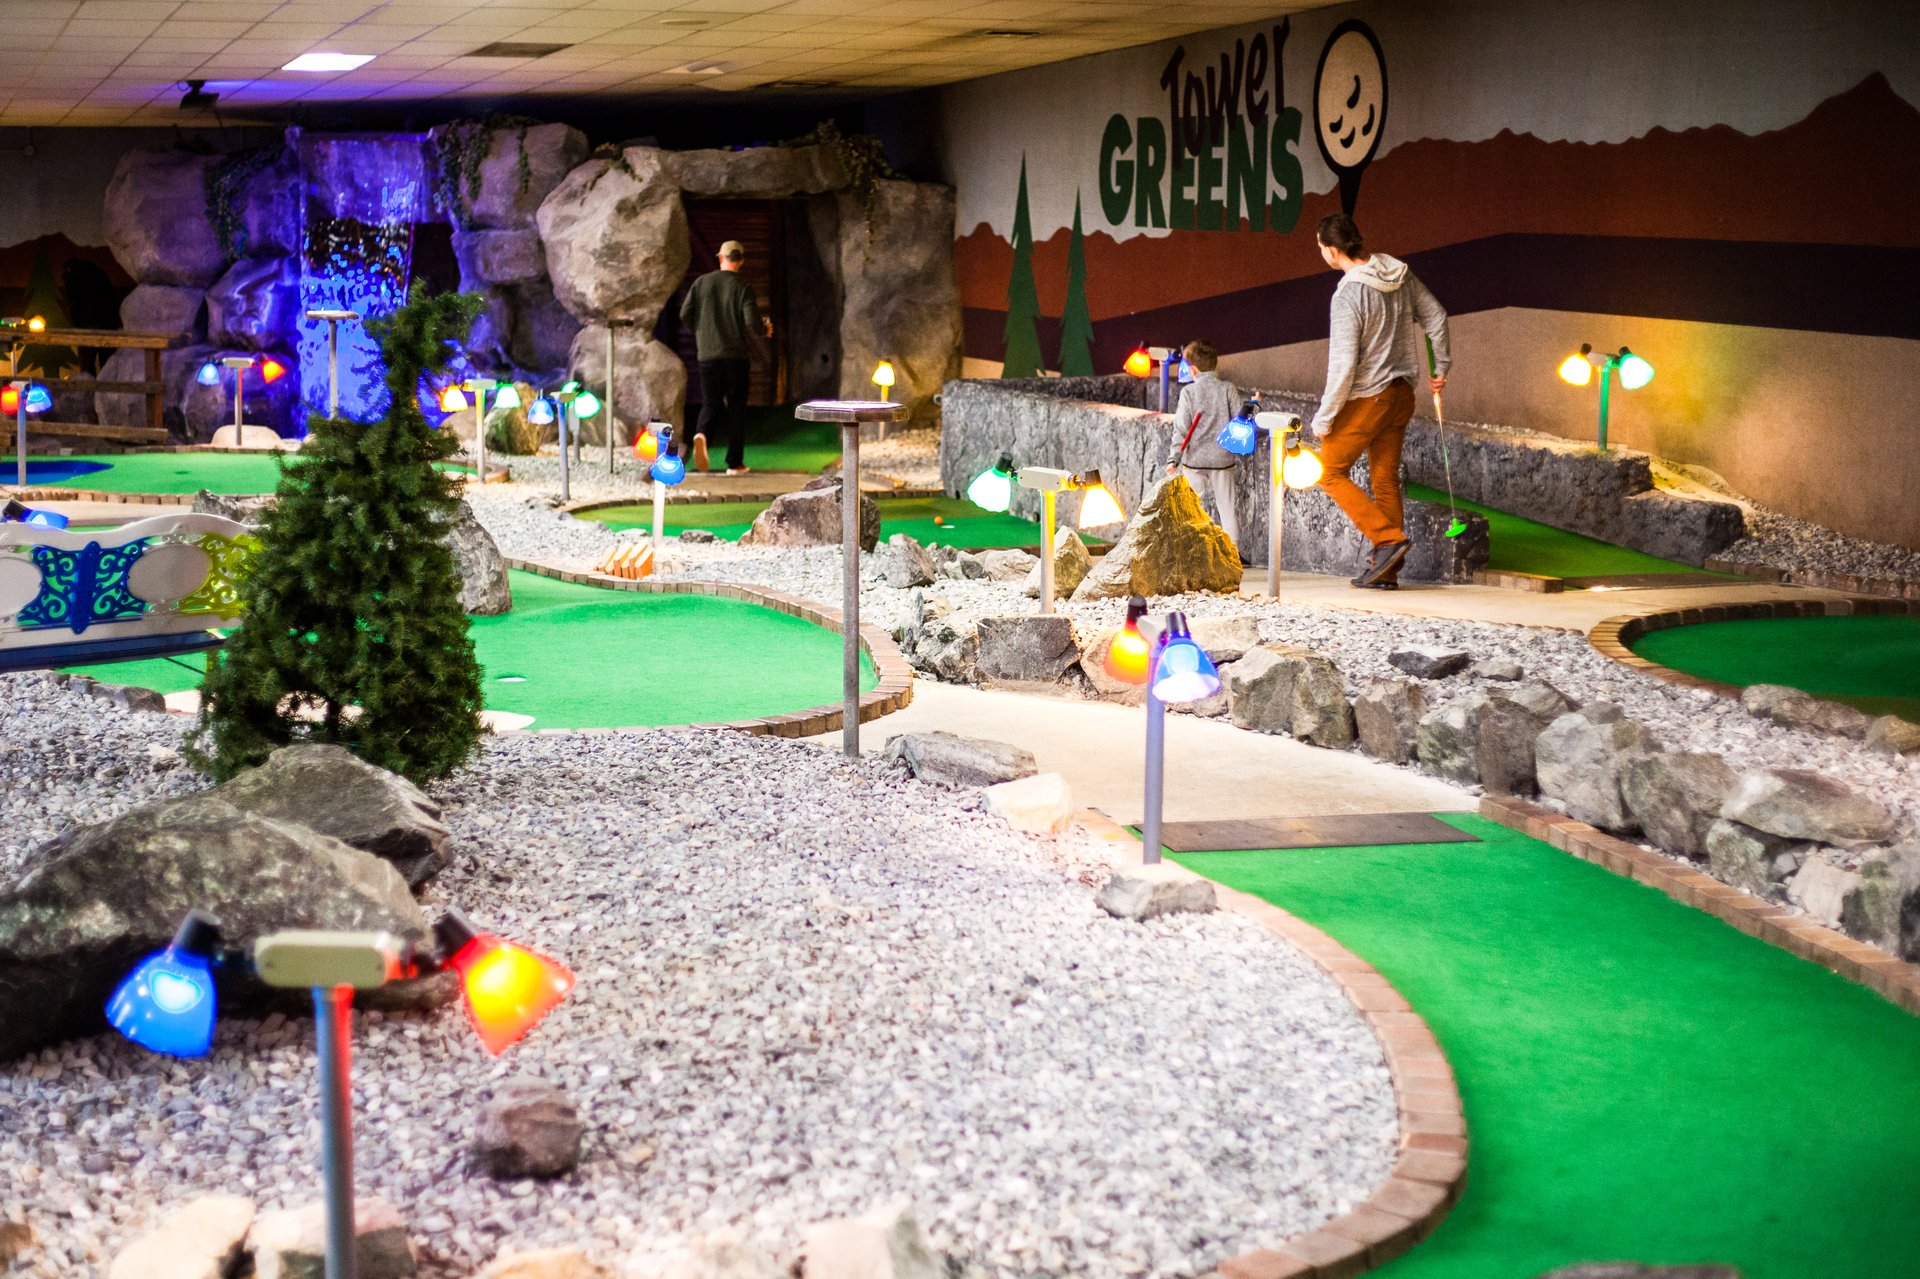 Mini Golf - Tower Lanes Entertainment Center - Bowling, Mini Golf, Great  Food, Bar & Arcade in Tacoma